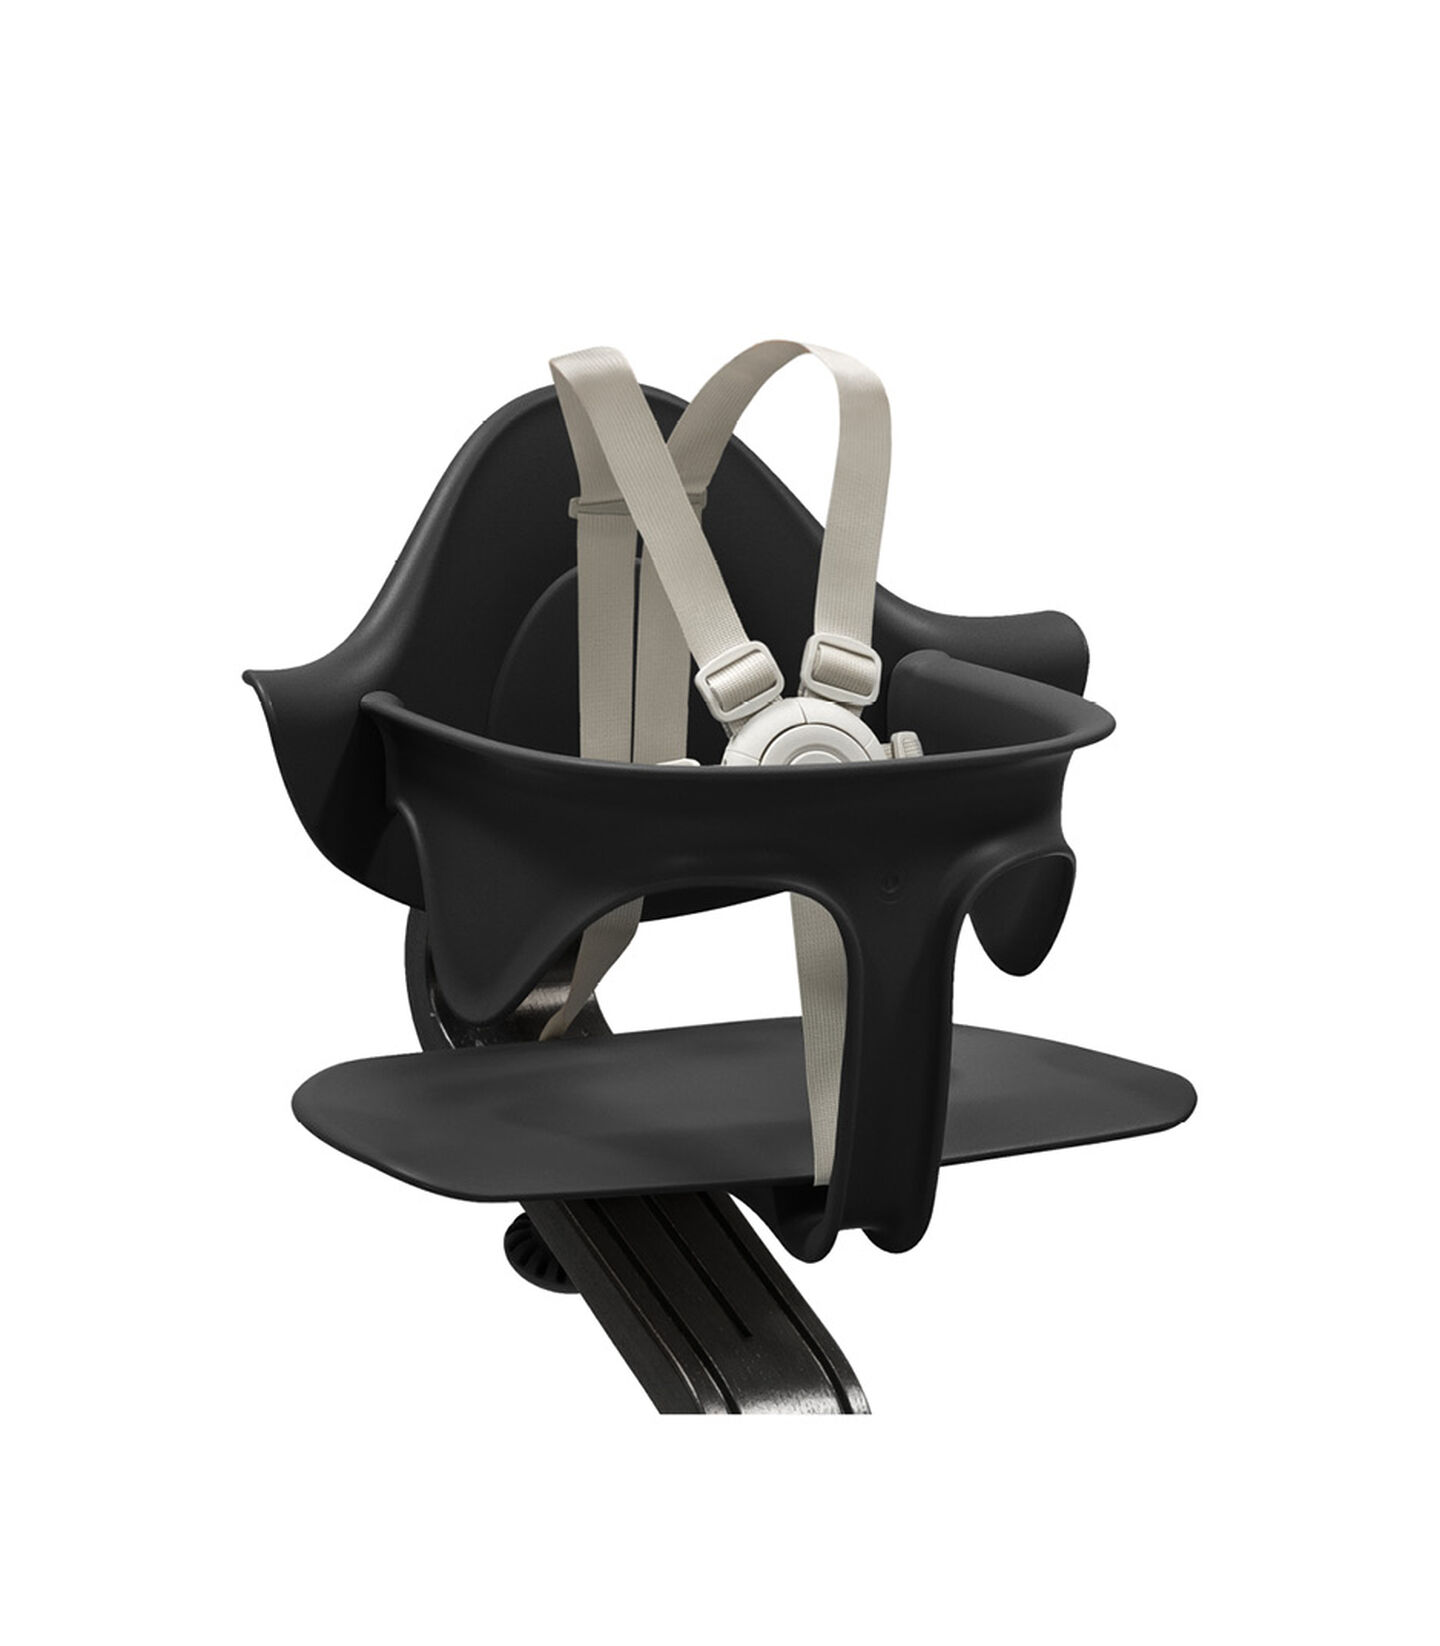 Stokke® Nomi® Black High Chair Bundle, Black, mainview view 2